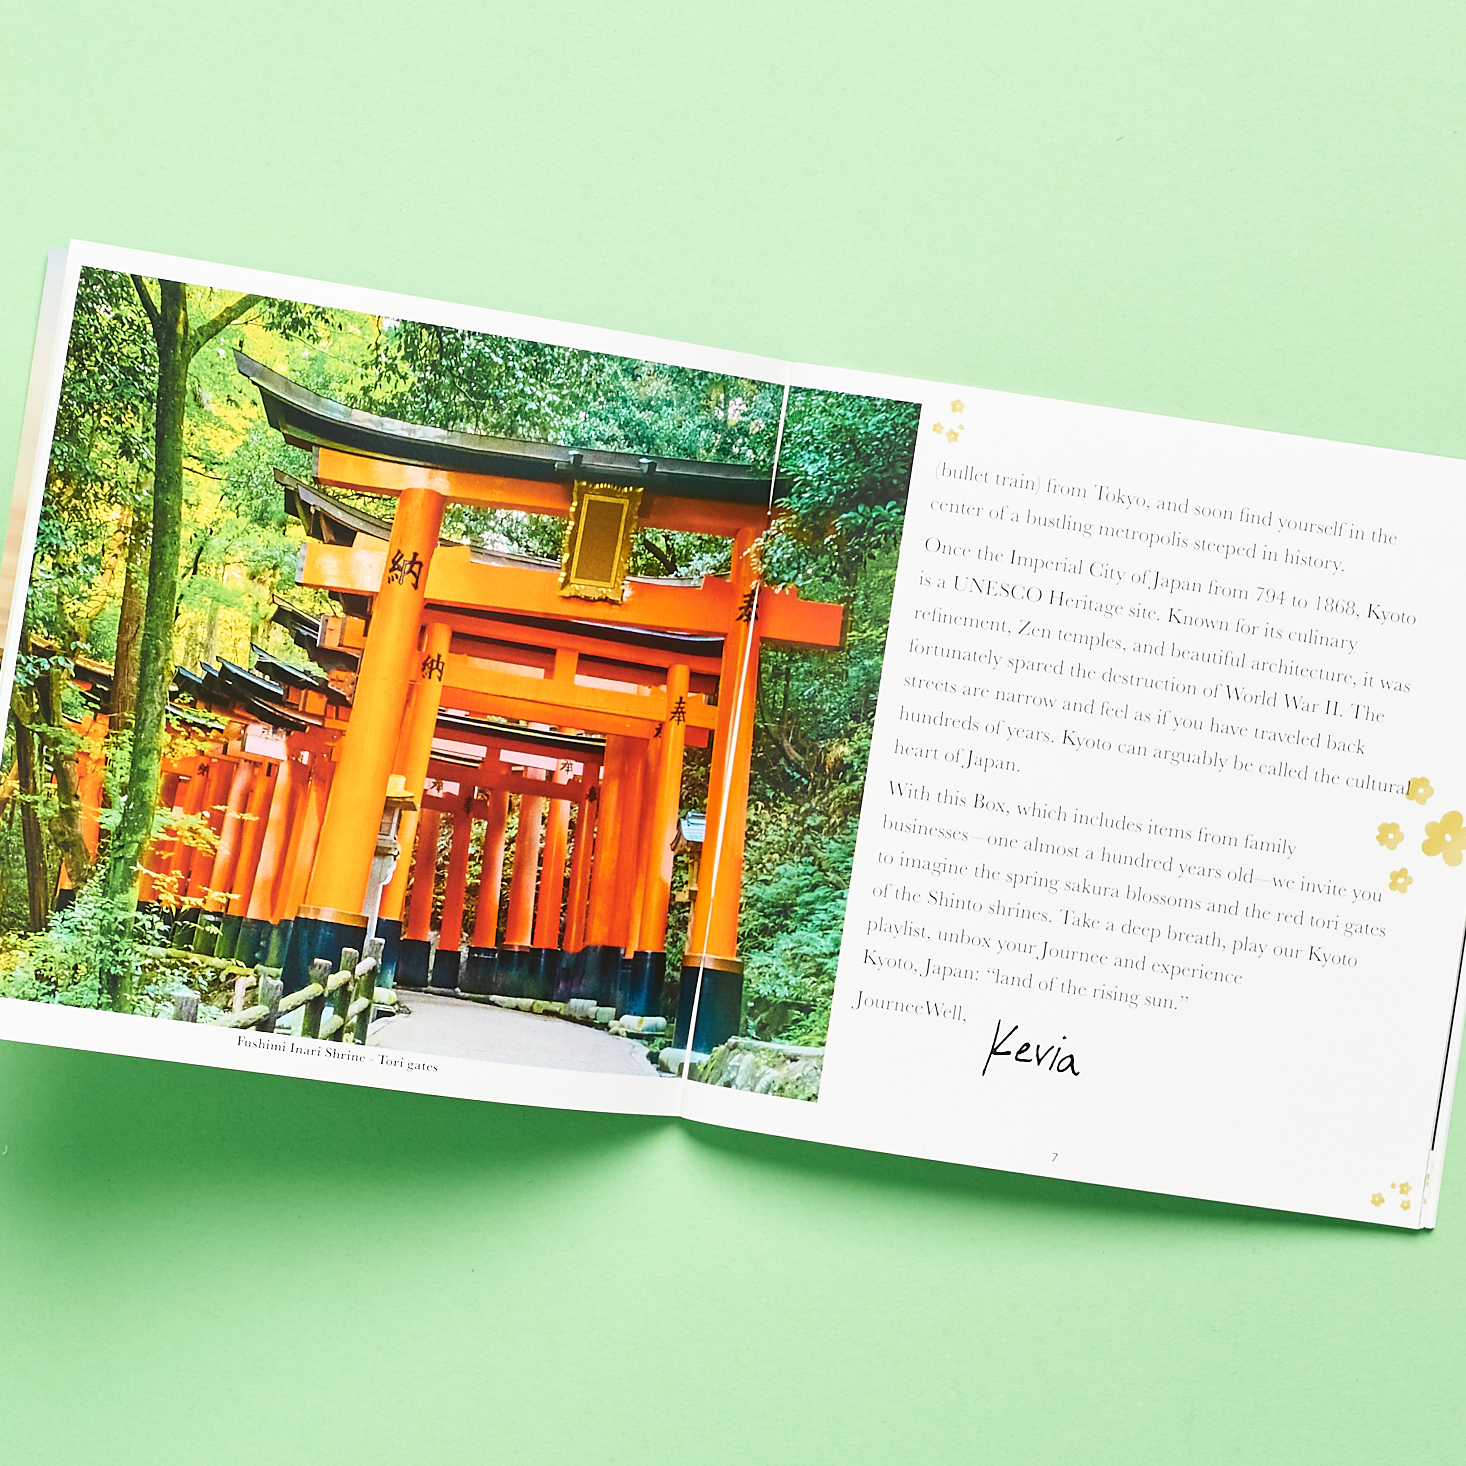 Inside of Journee Box Kyoto booklet